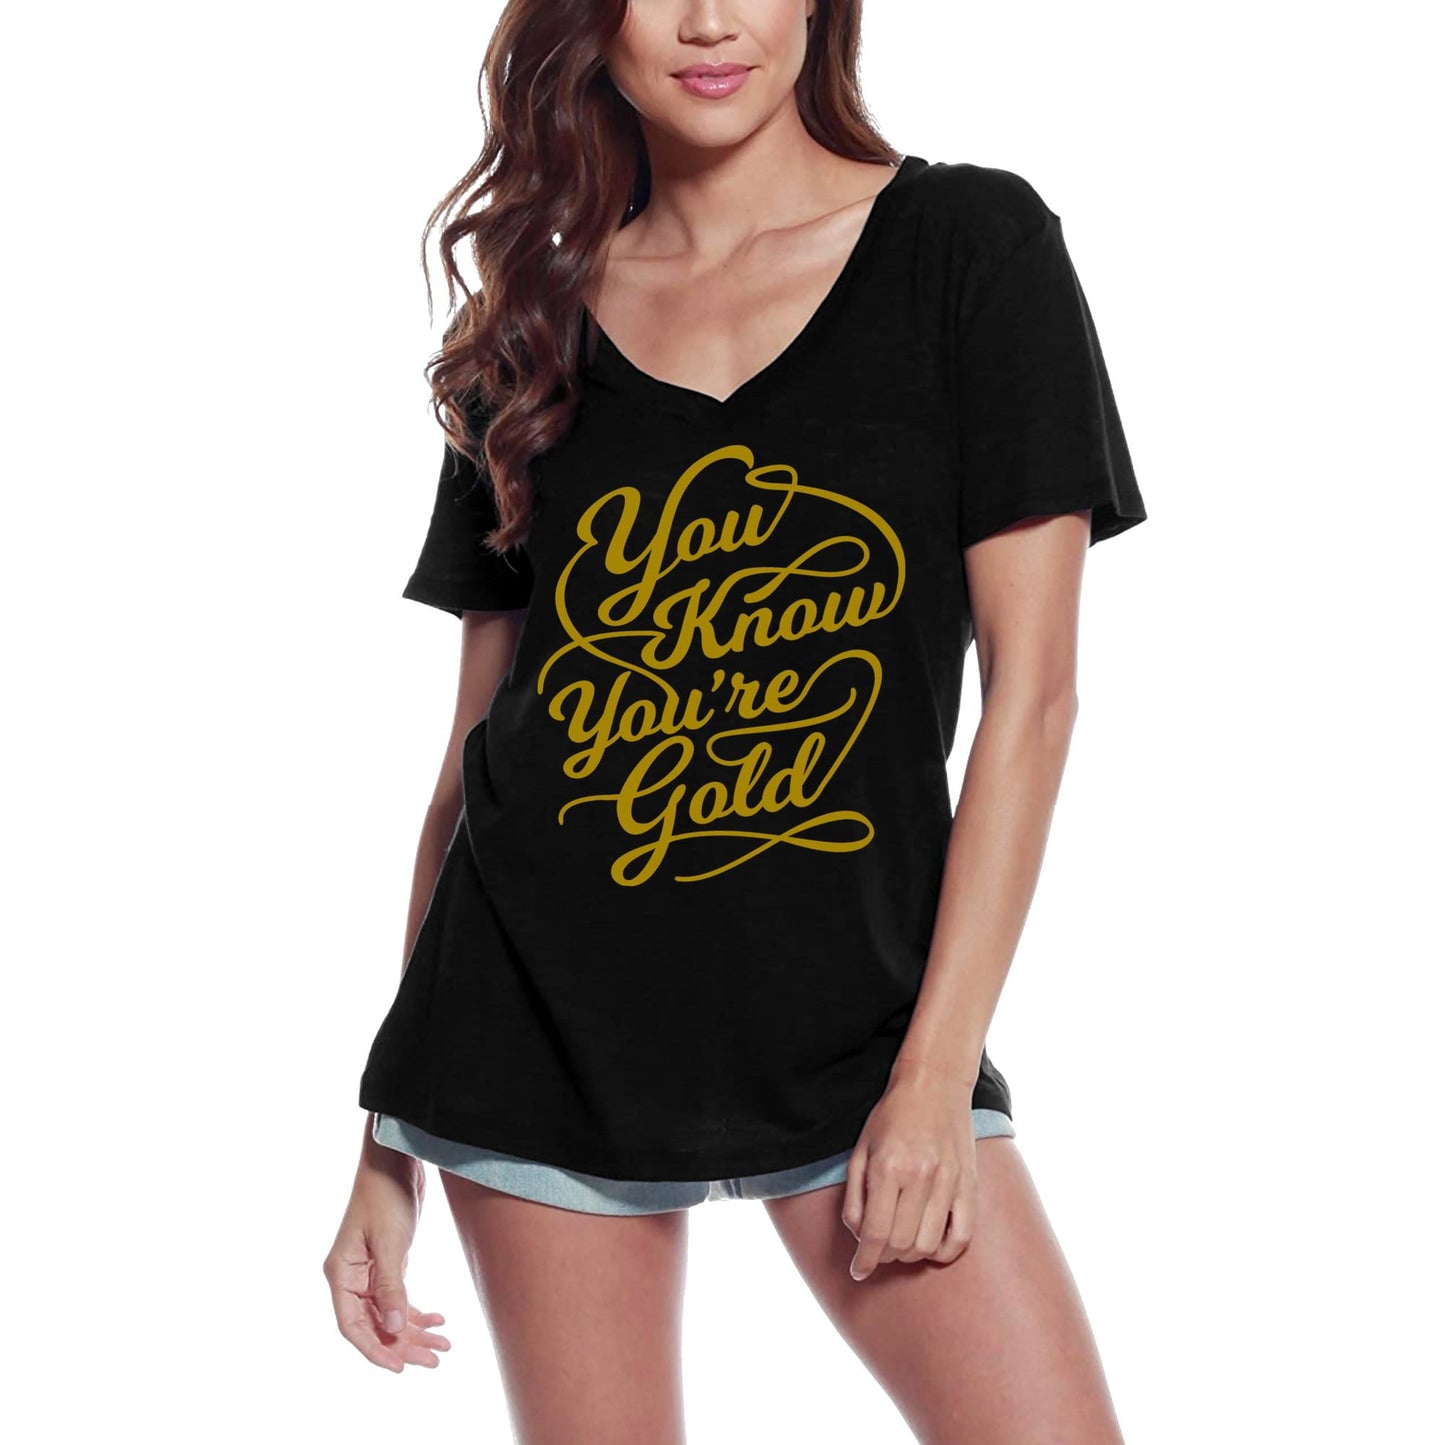 ULTRABASIC Women's T-Shirt You Know You're Gold - Inspiring Motivation Slogan Tee